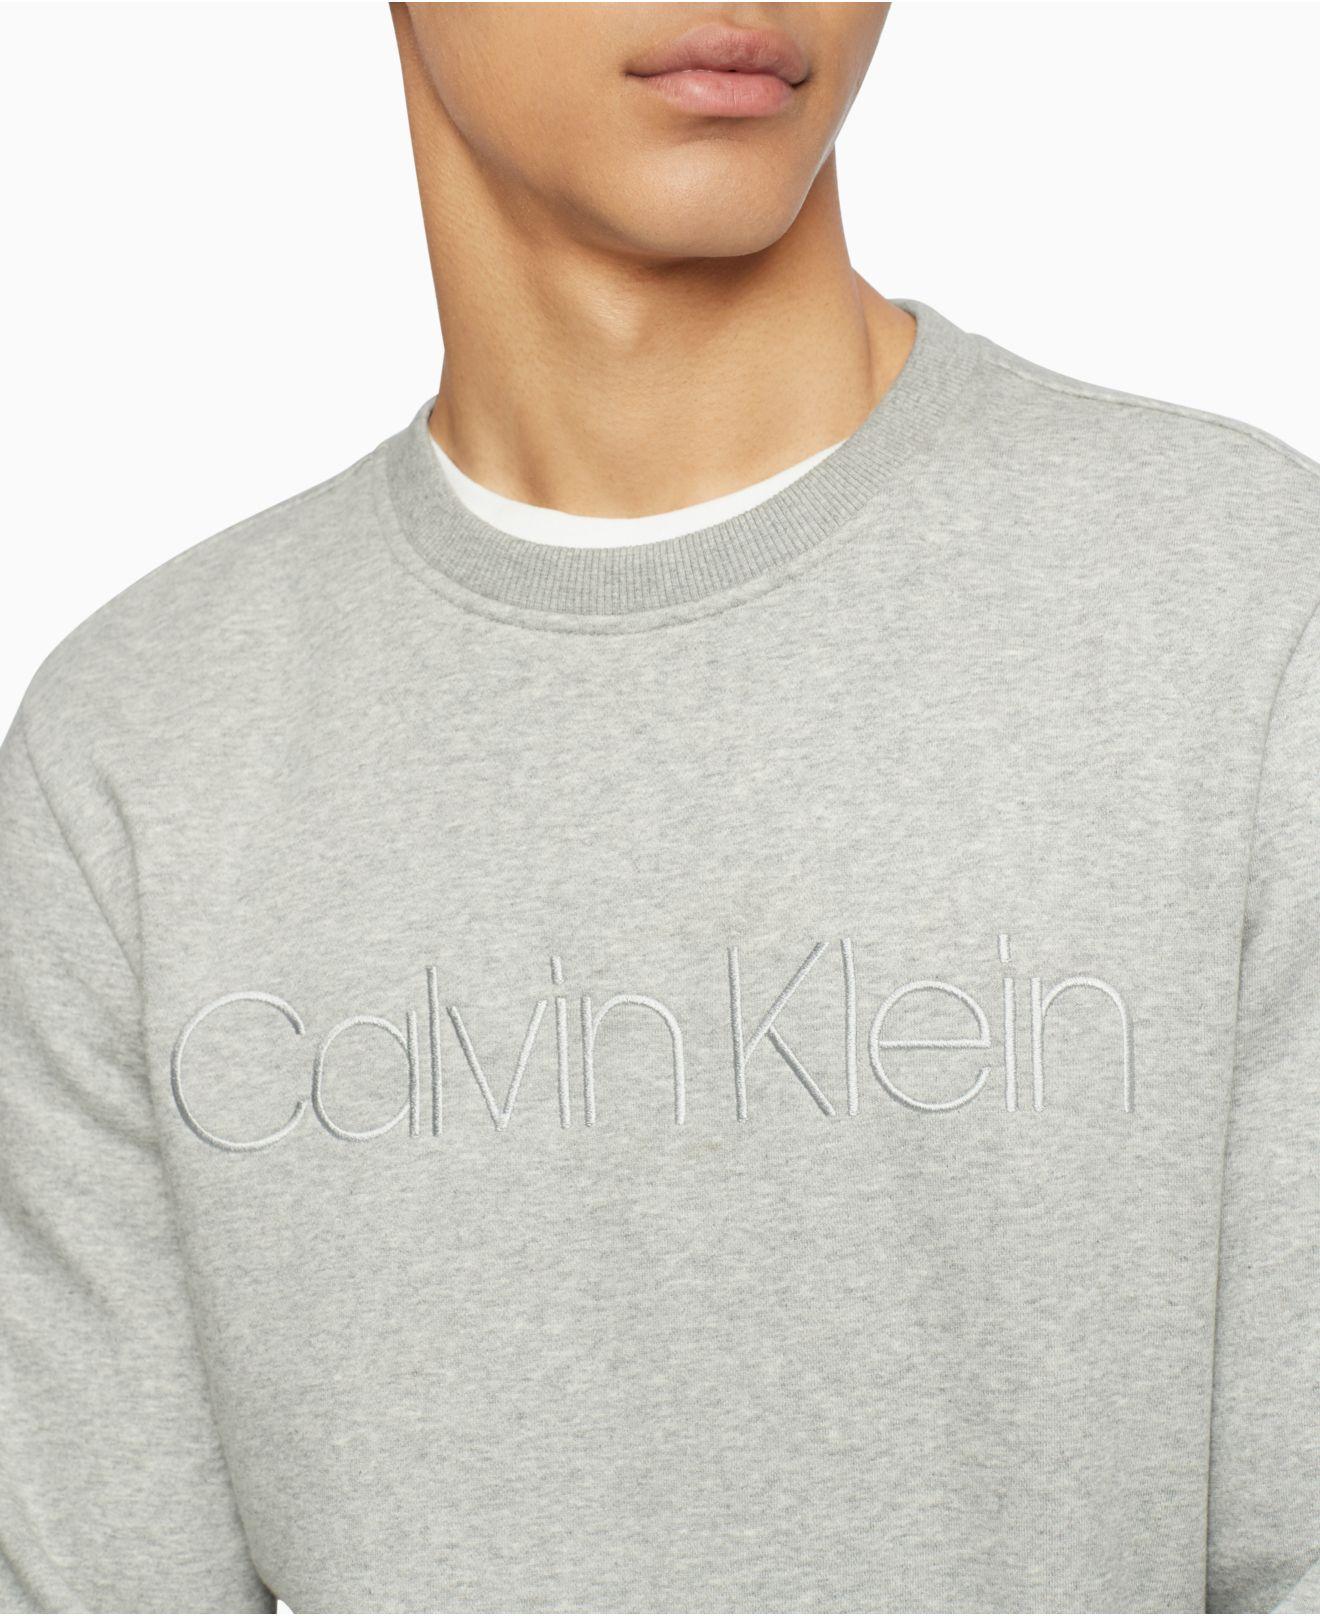 Calvin Klein Embroidered Sweatshirt Clearance, 55% OFF |  www.bridgepartnersllc.com